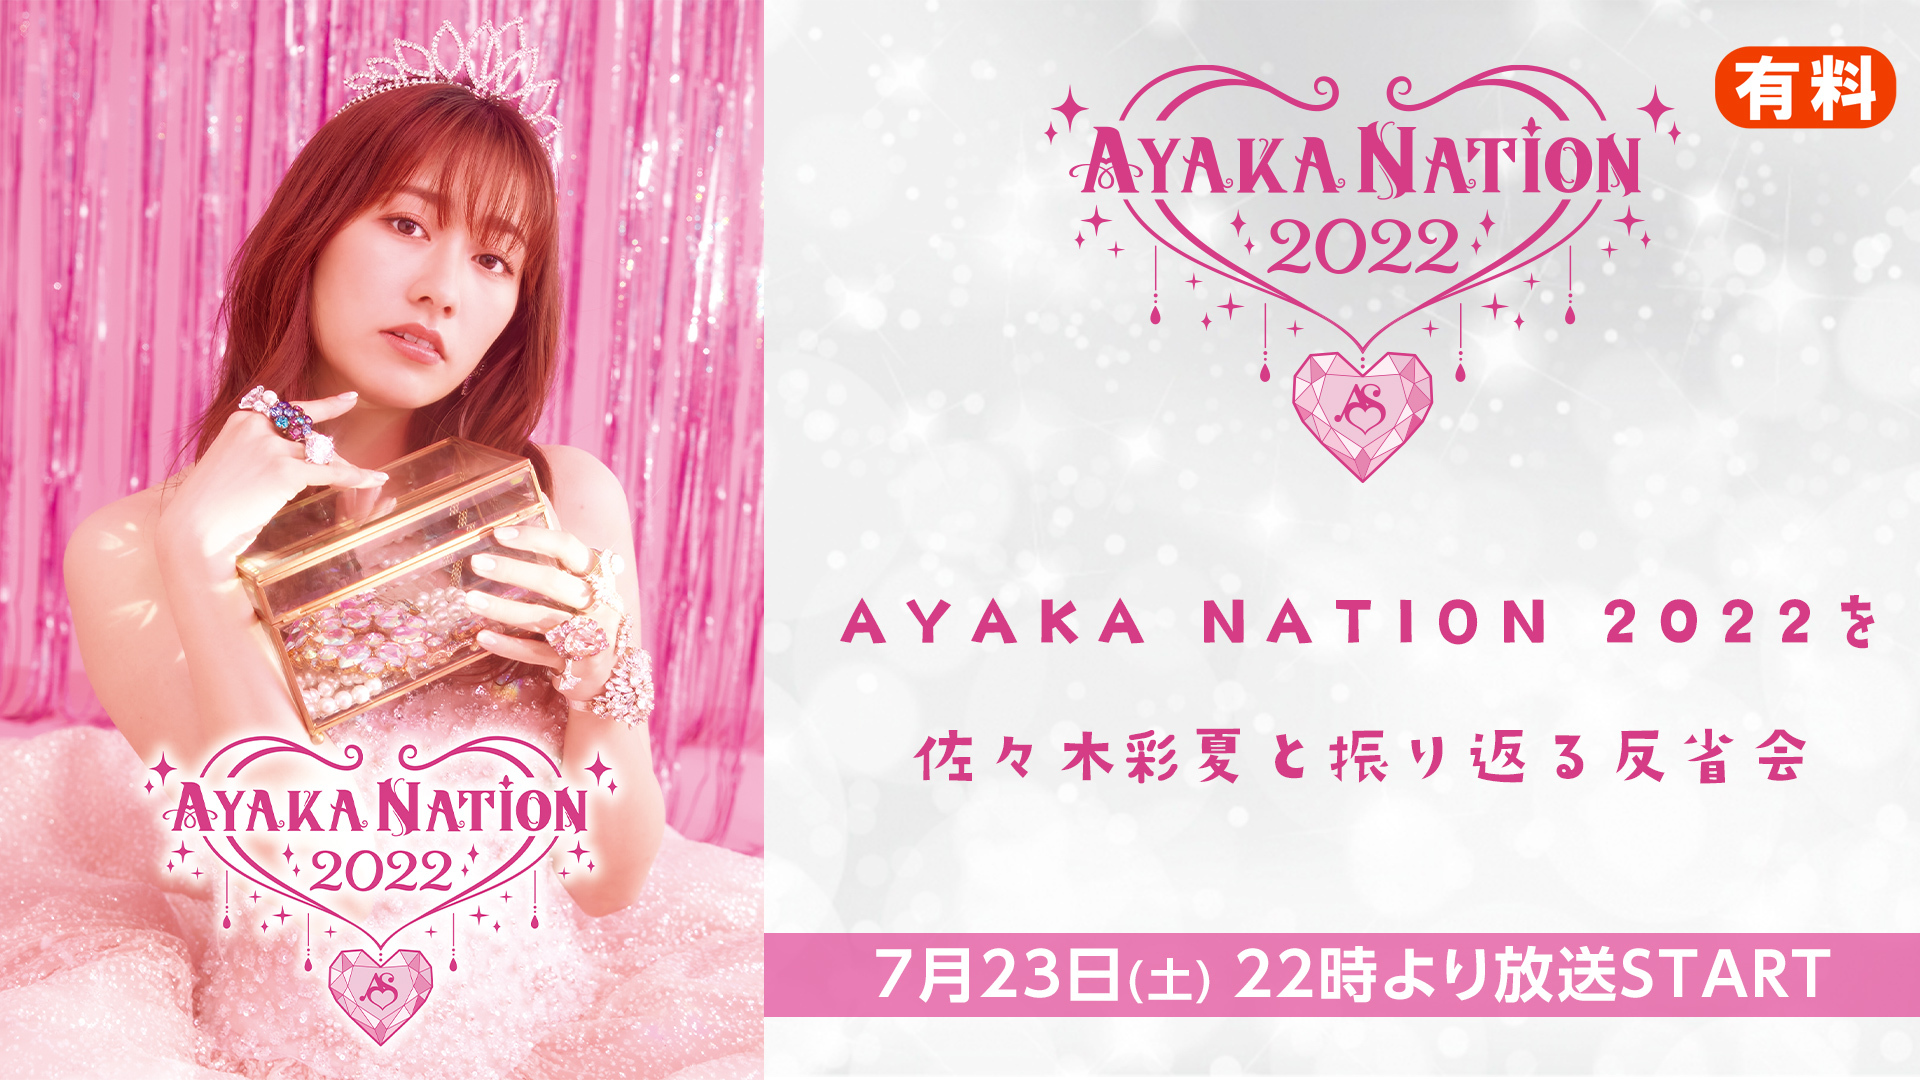 AYAKA NATION 2022を佐々木彩夏と振り返る反省会